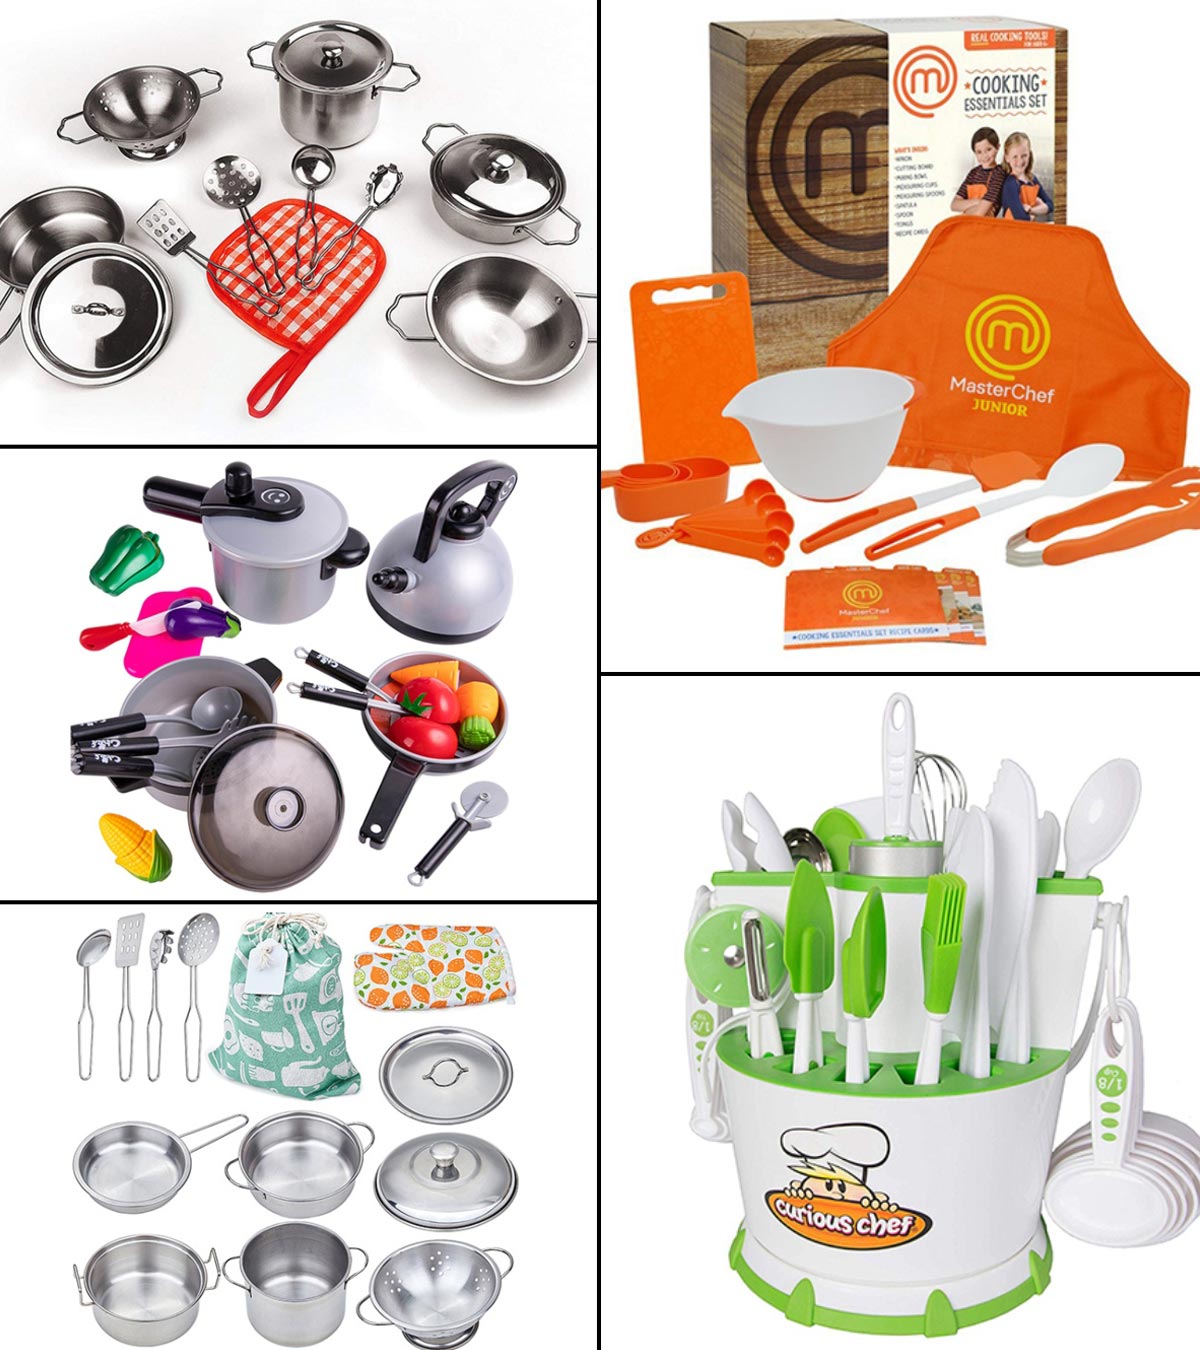 https://www.momjunction.com/wp-content/uploads/2019/09/Best-Cooking-Kits-To-Buy-For-Kids.jpg